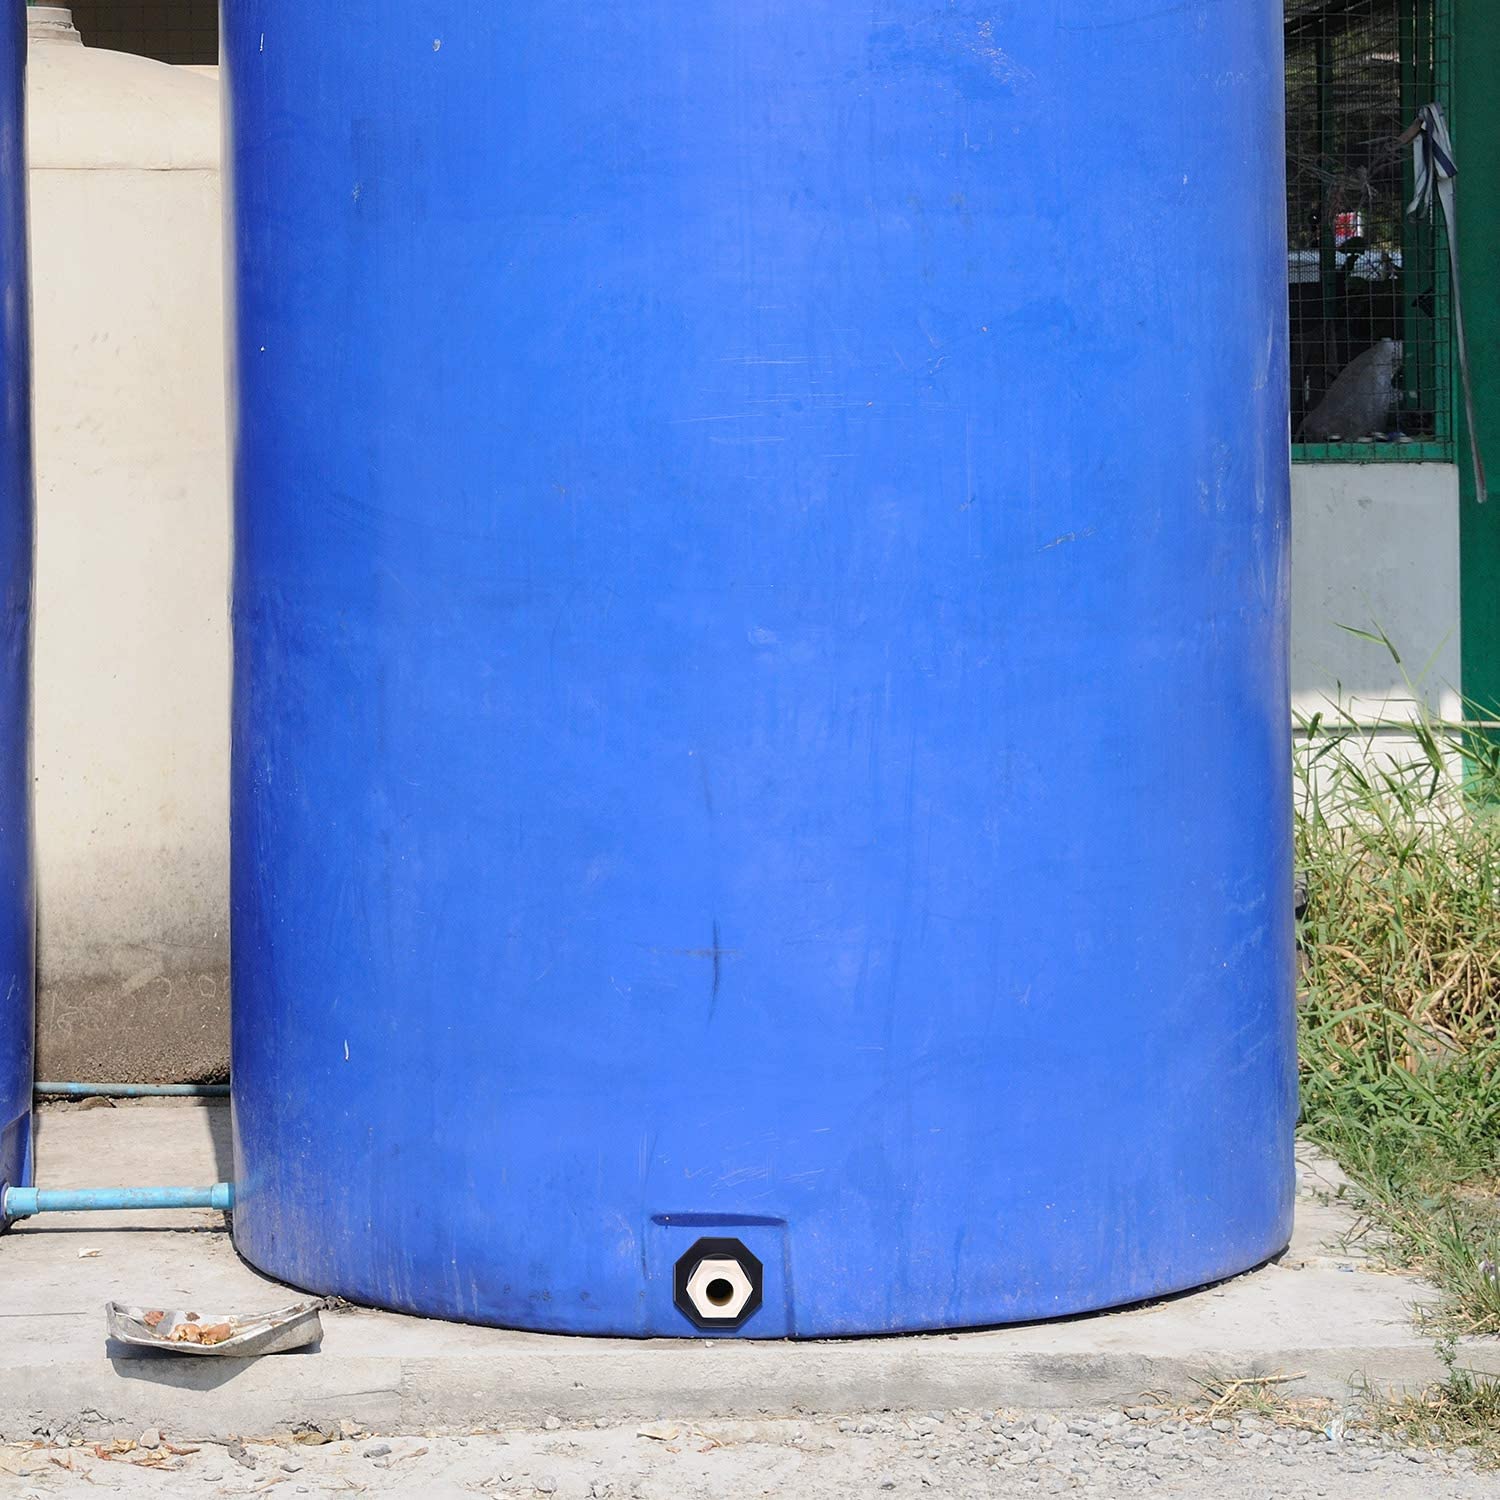 3/4 Inch PVC Bulkhead Fitting and Garden Hose Adapter Kit for Rain Barrels Aquariums Water Tanks Plastic